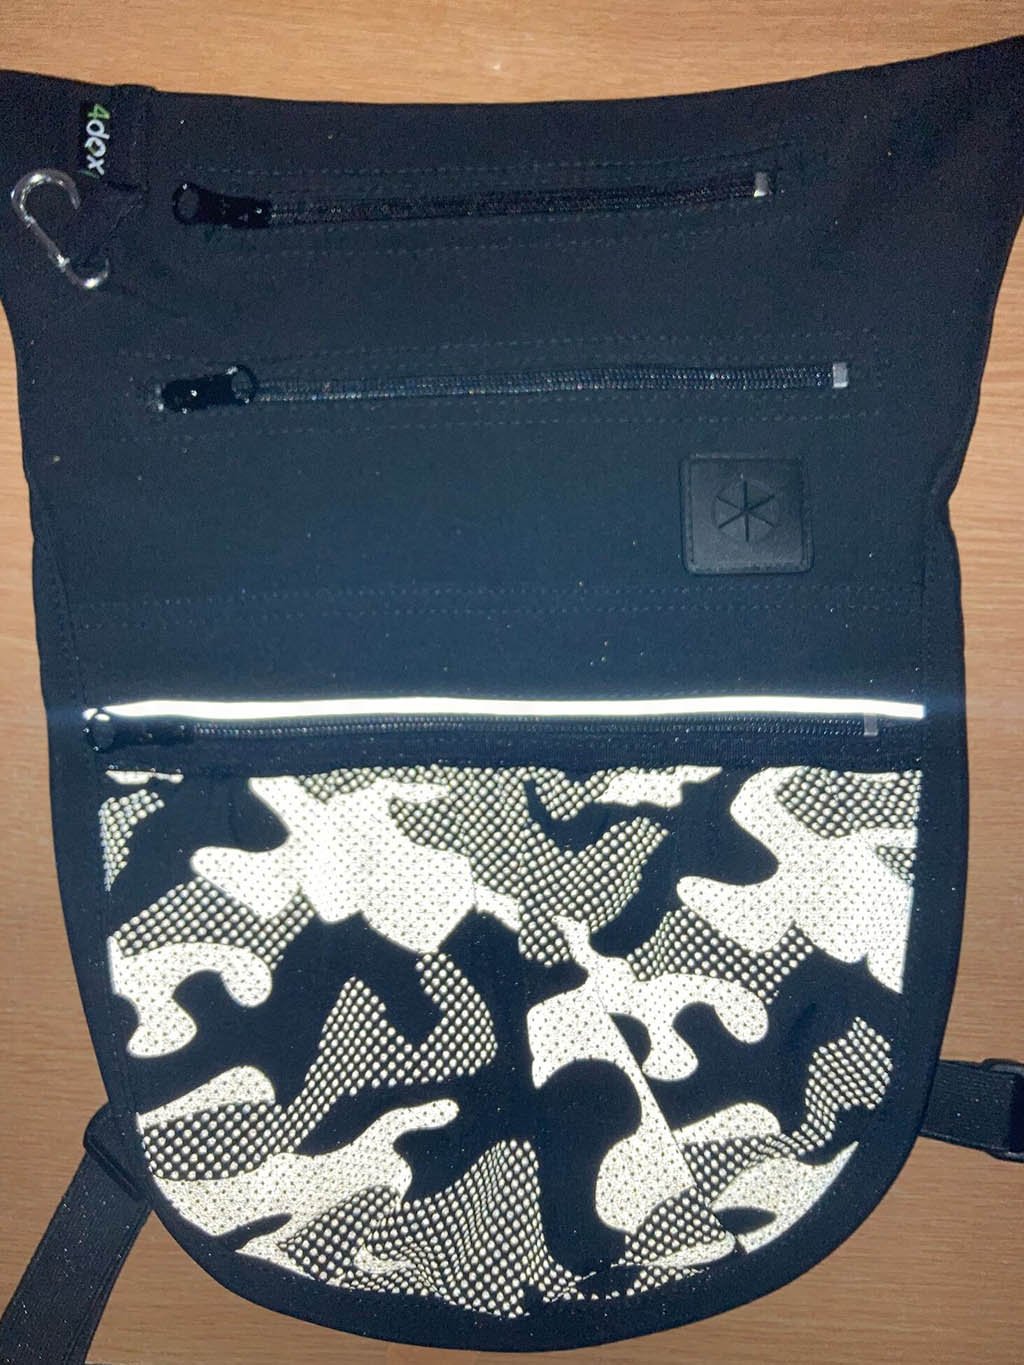 Treat bag 3 in 1 - customized